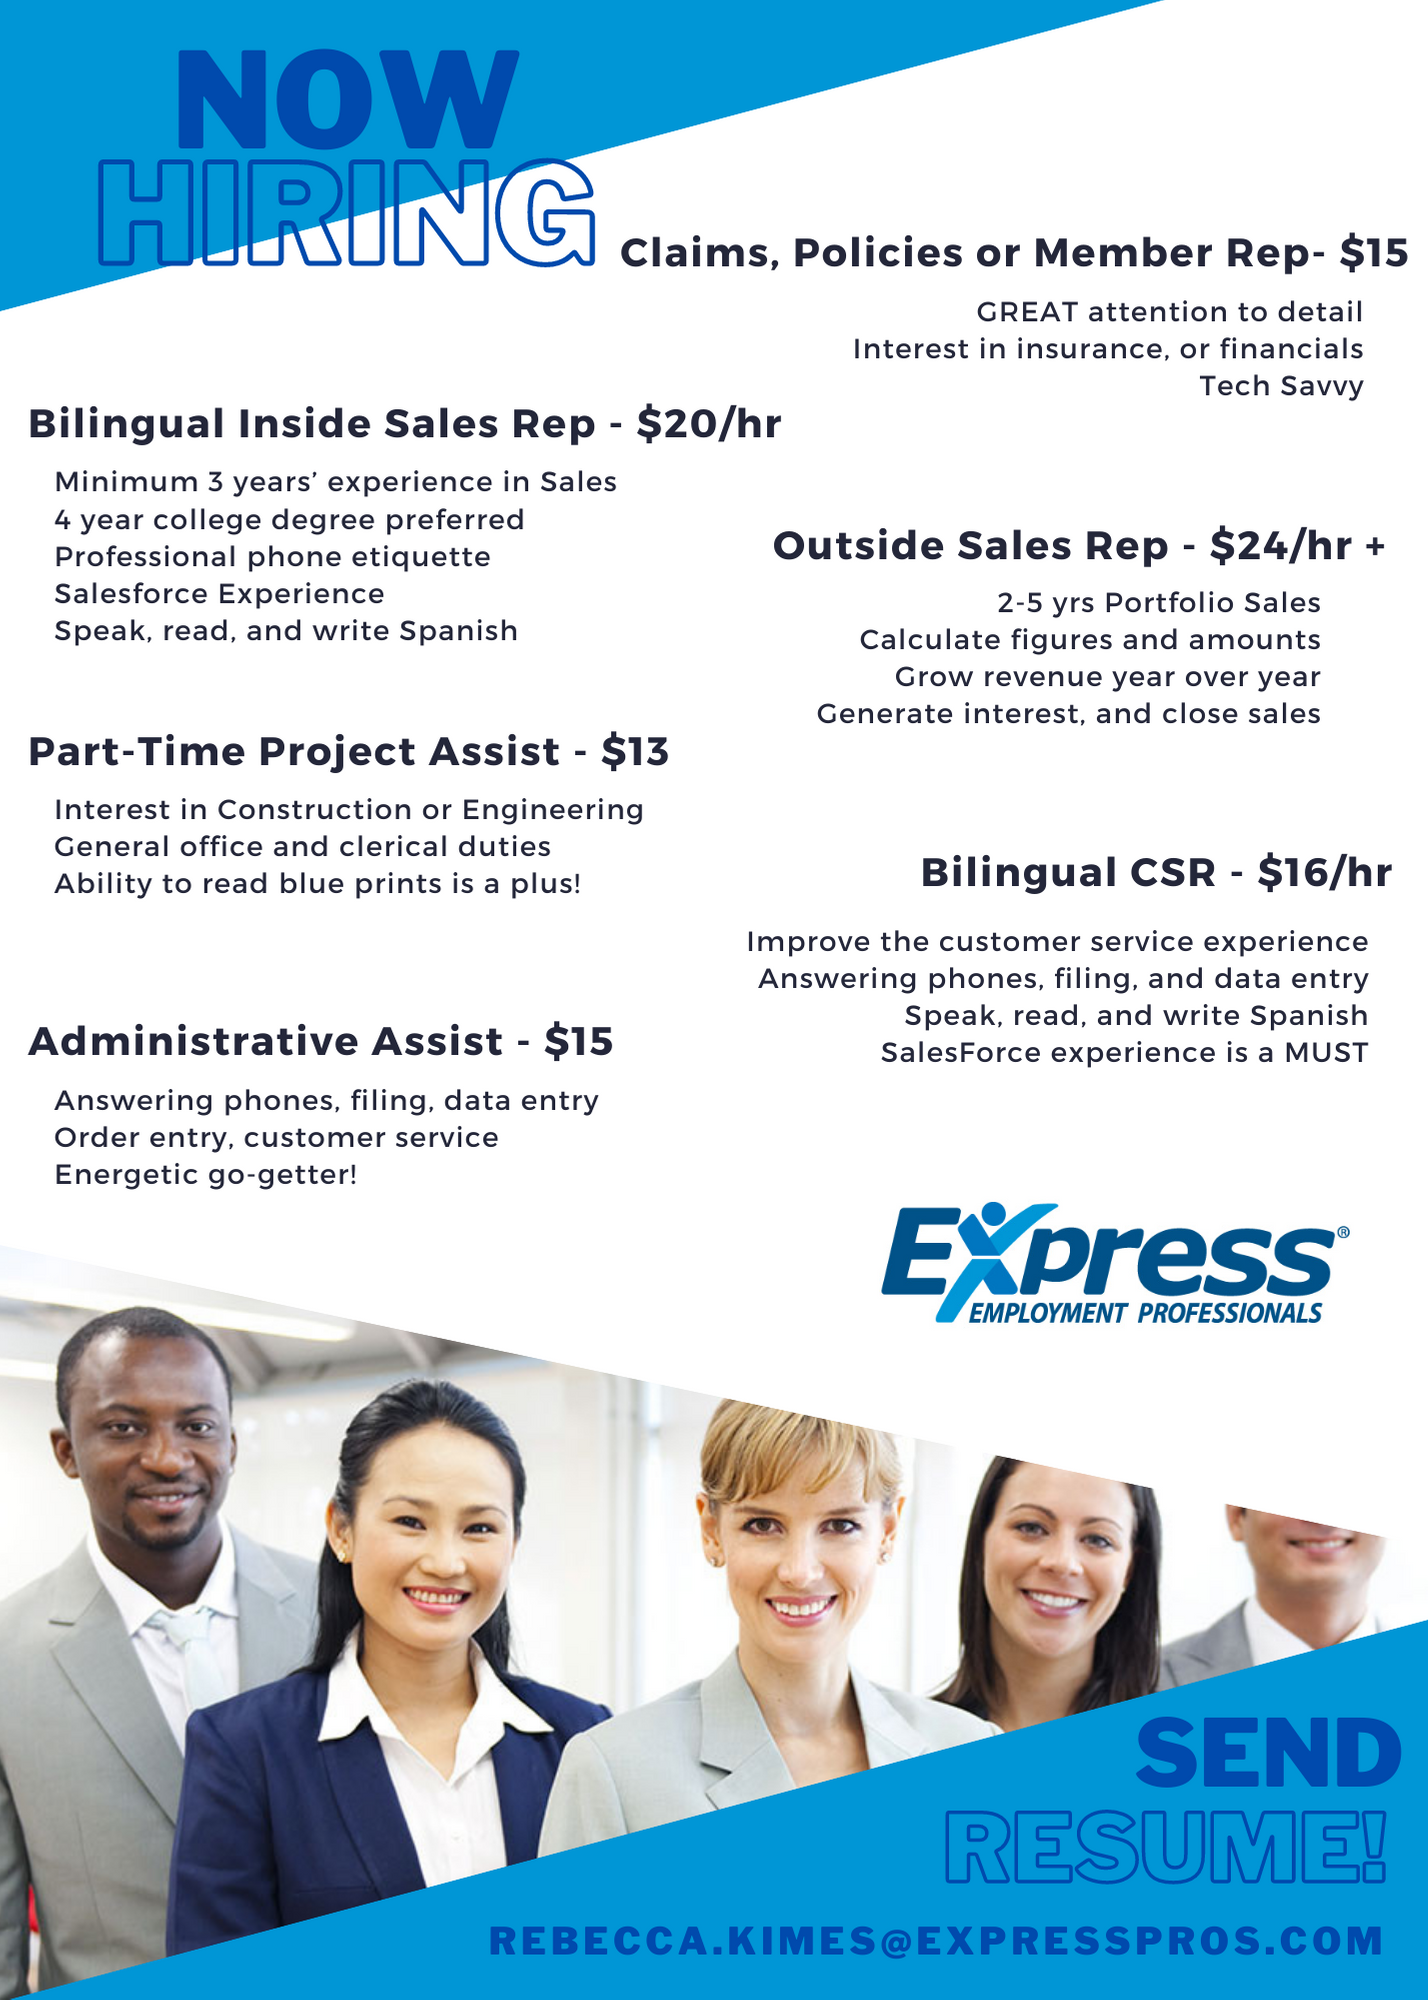 ExpressPros Office Services